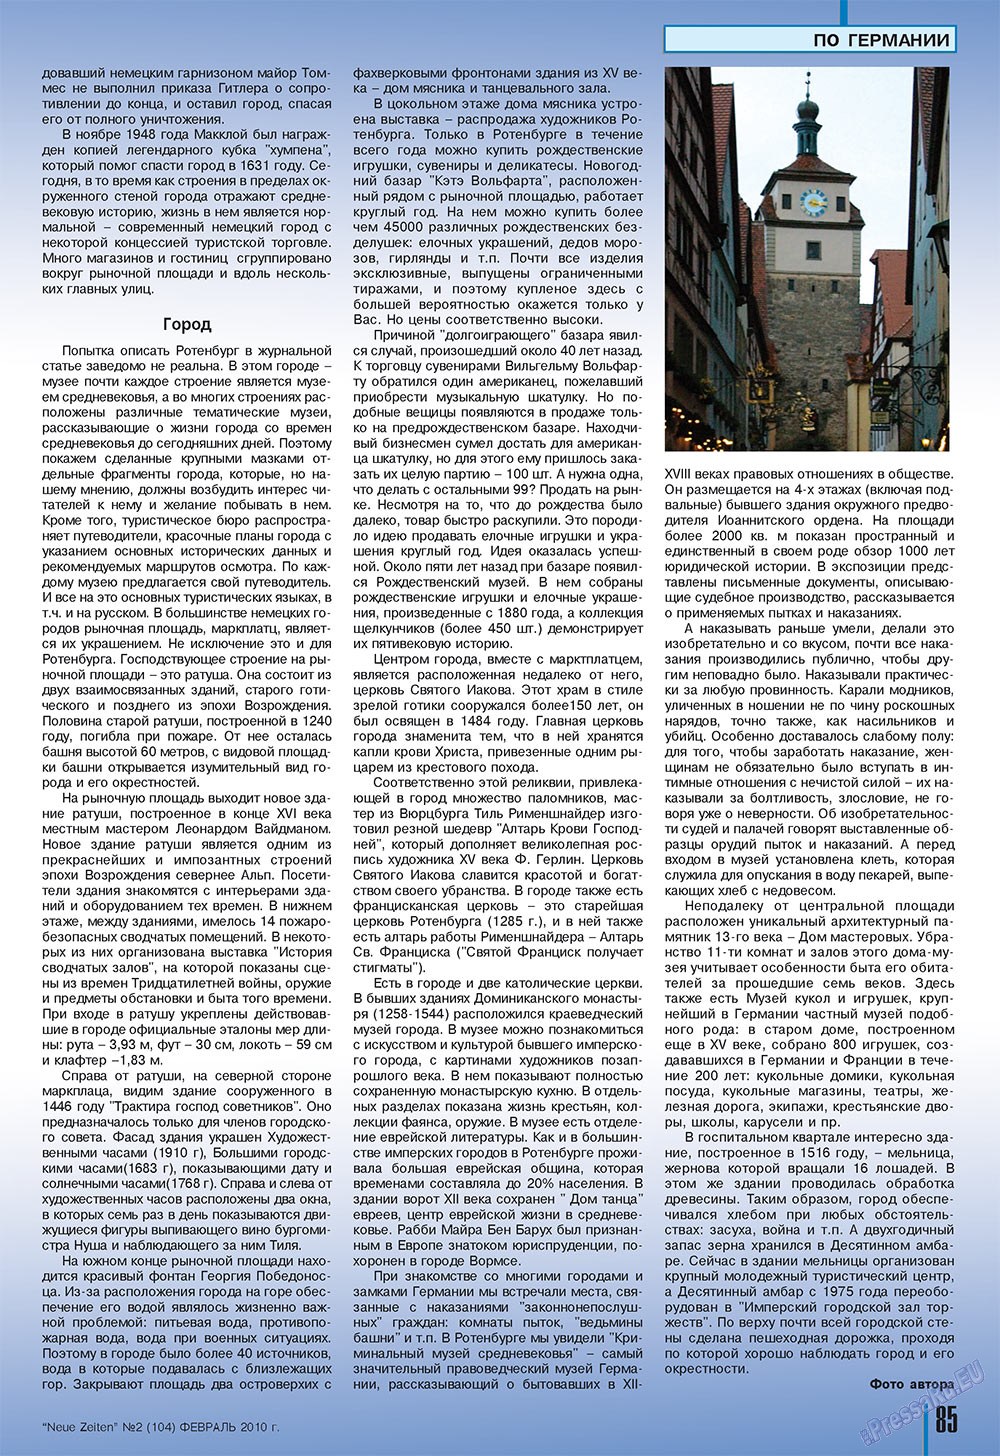 Neue Zeiten (журнал). 2010 год, номер 2, стр. 85